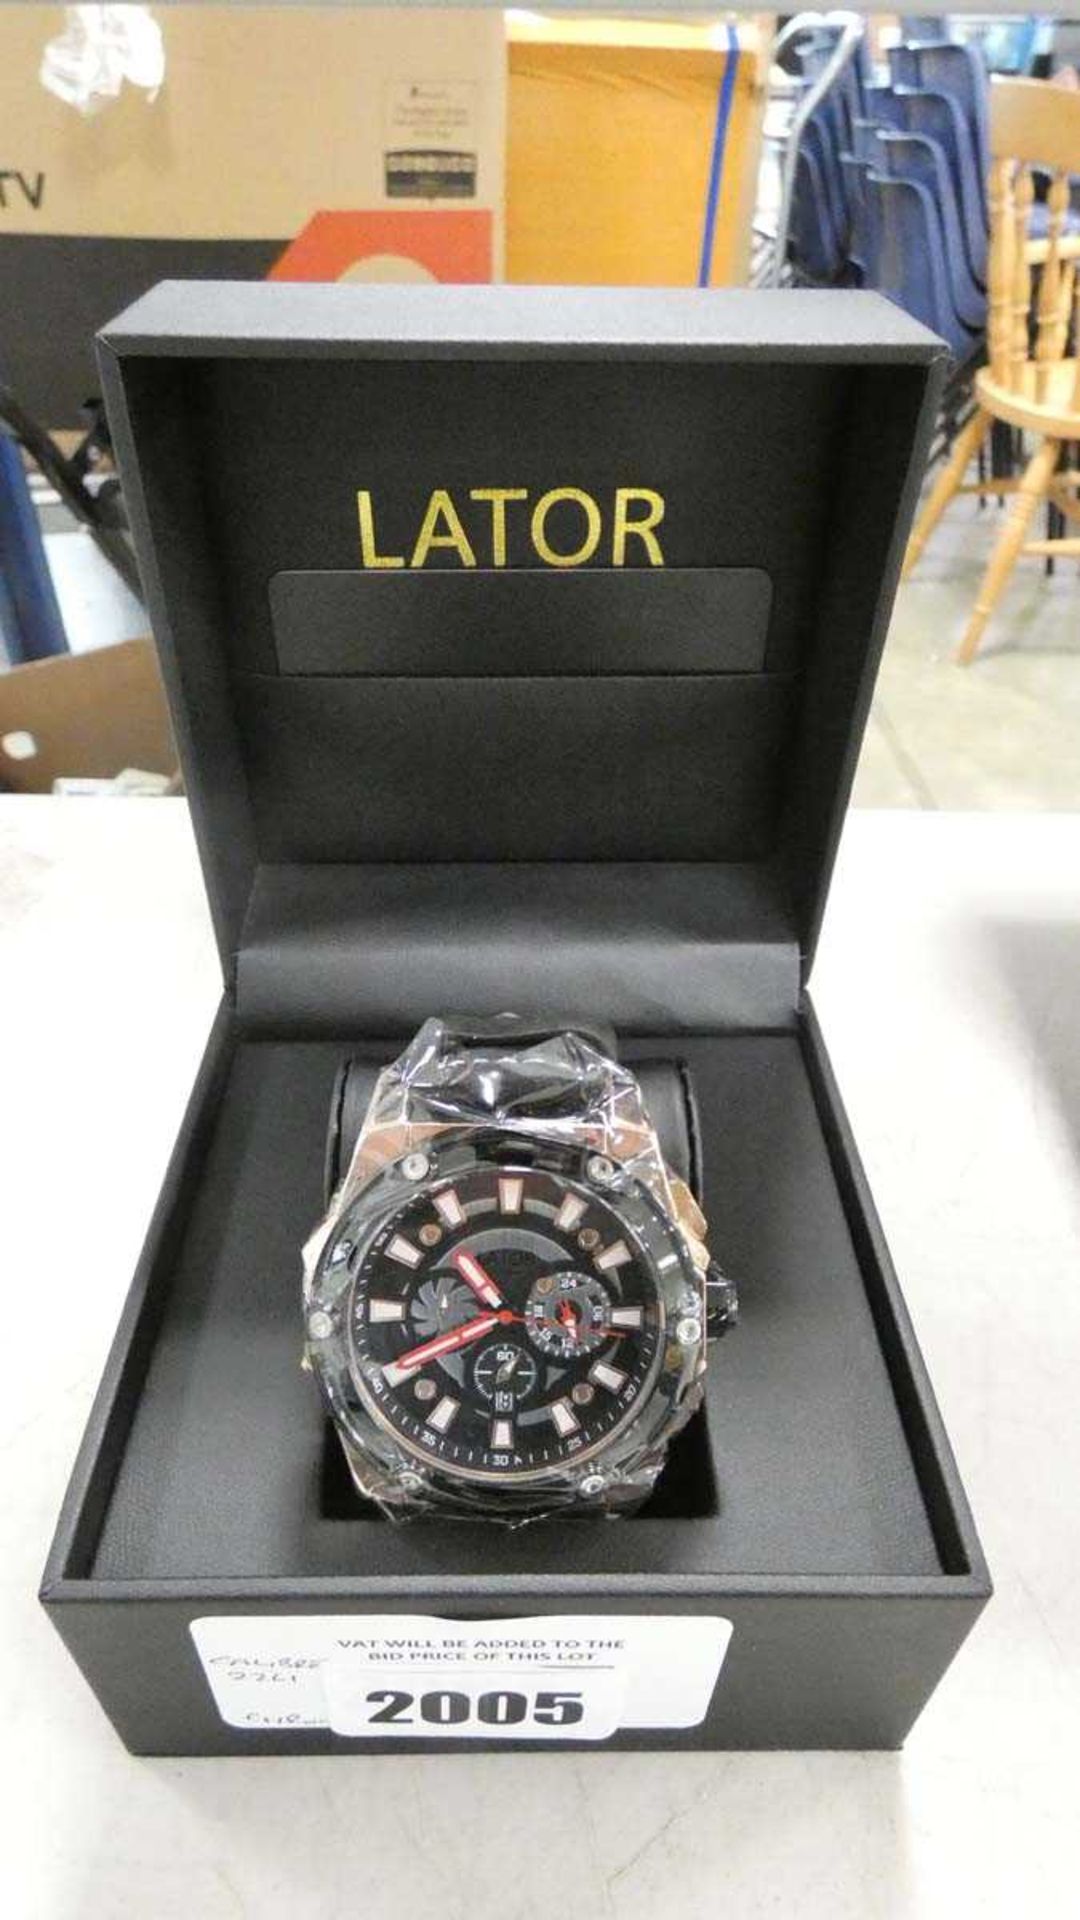 +VAT Lator Calibre 2261 chronograph gents wrist watch with box